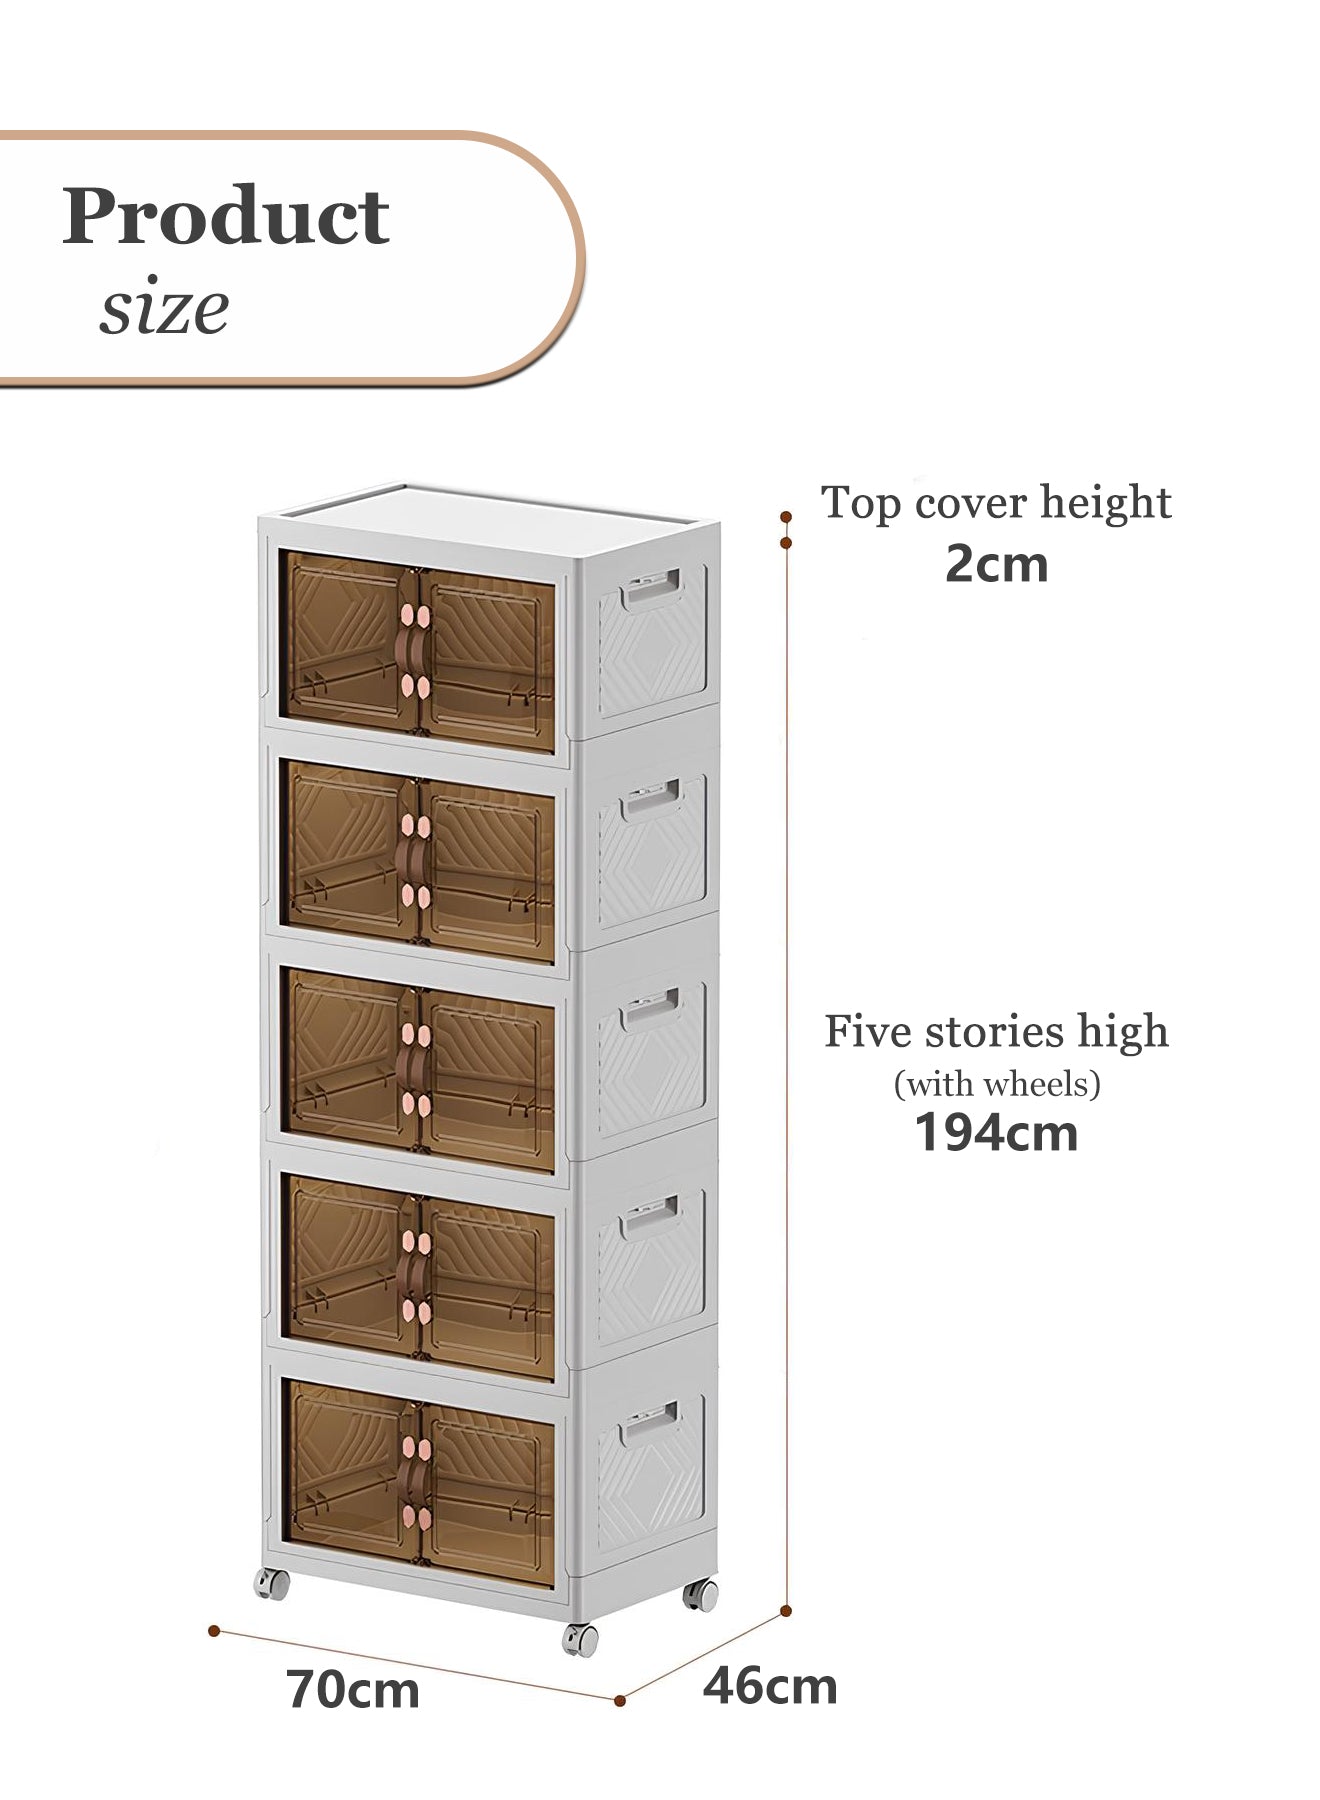 【KSA STOCK】Foldable plastic storage box with wheels and doors, five shelves, large size 193*70cm  NK008